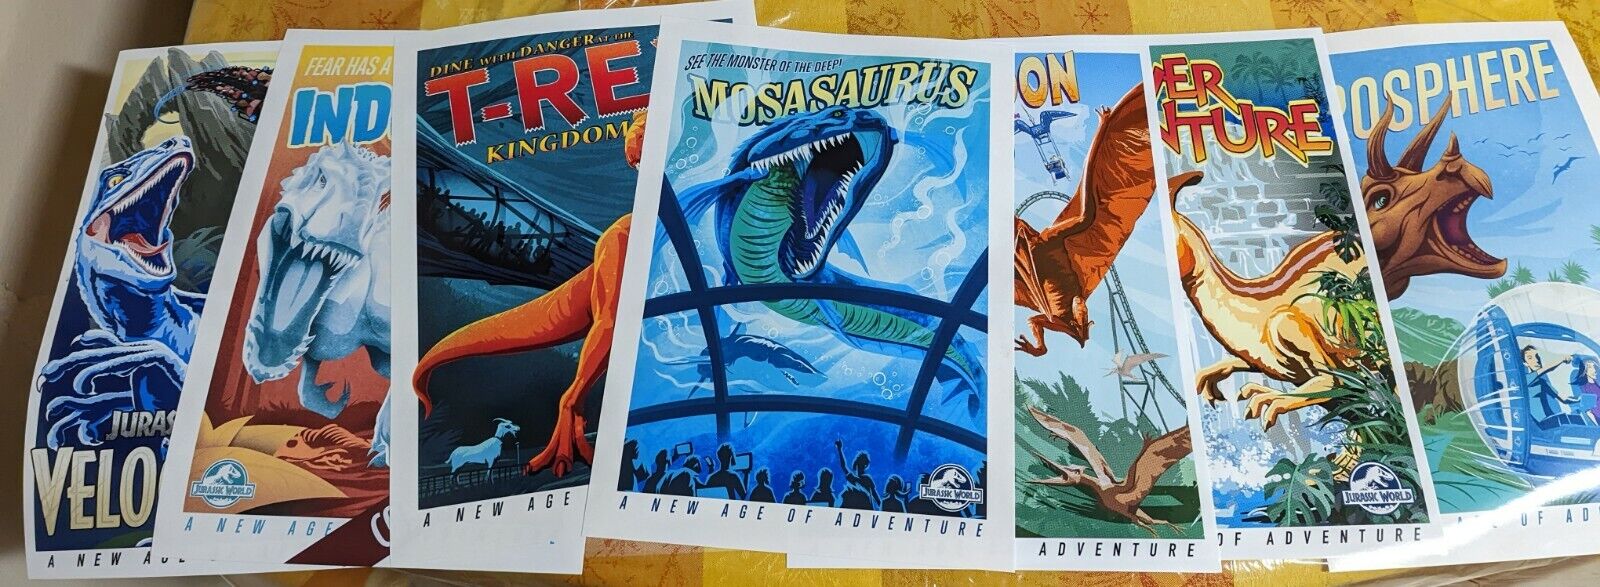 Velocicoaster Jurassic Park 7 Poster Print Set River Adventure T-Rex Mosasaurus